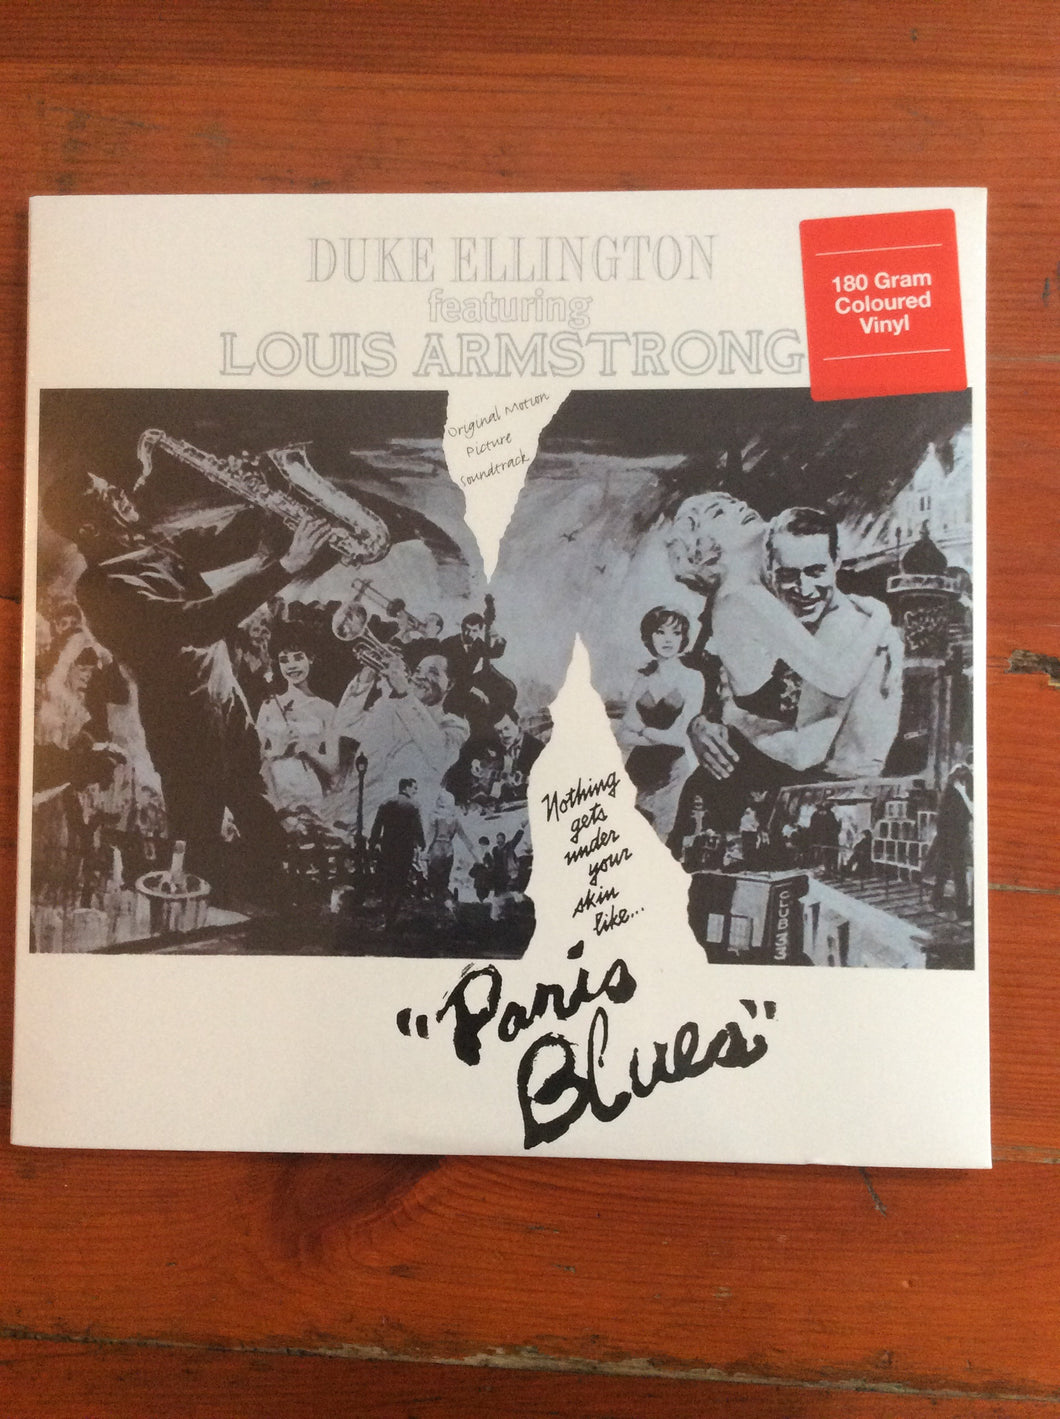 Duke Ellington feat. Louis Armstrong